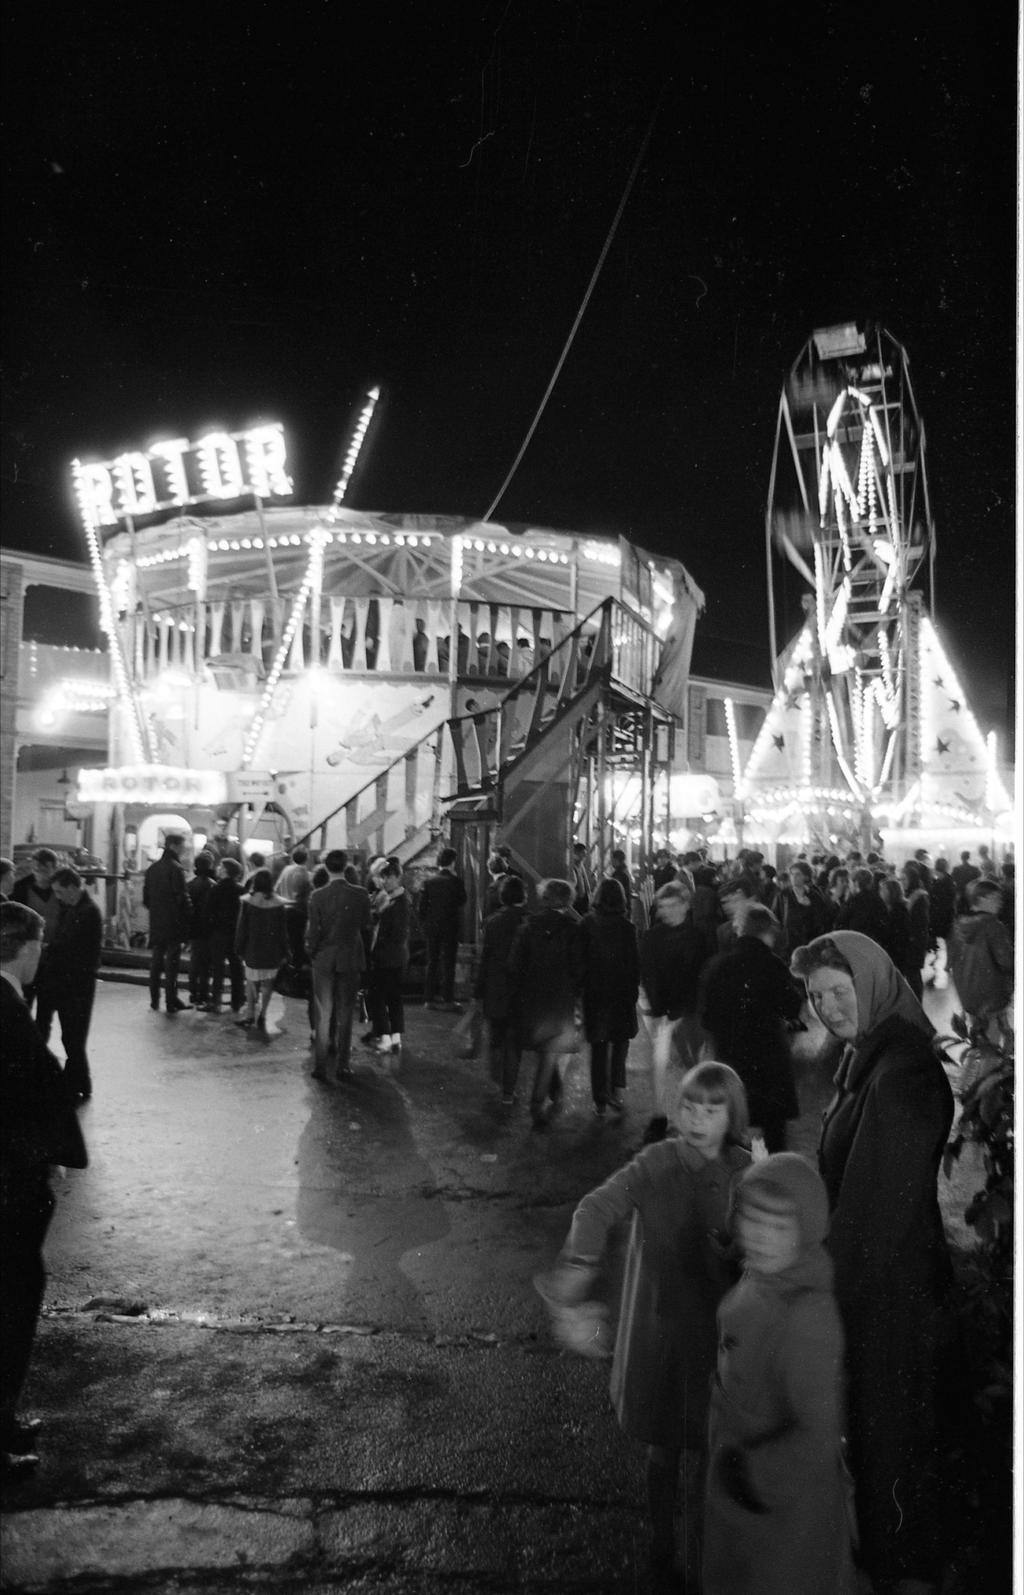 Derek Evans photo of the Hereford May Fair